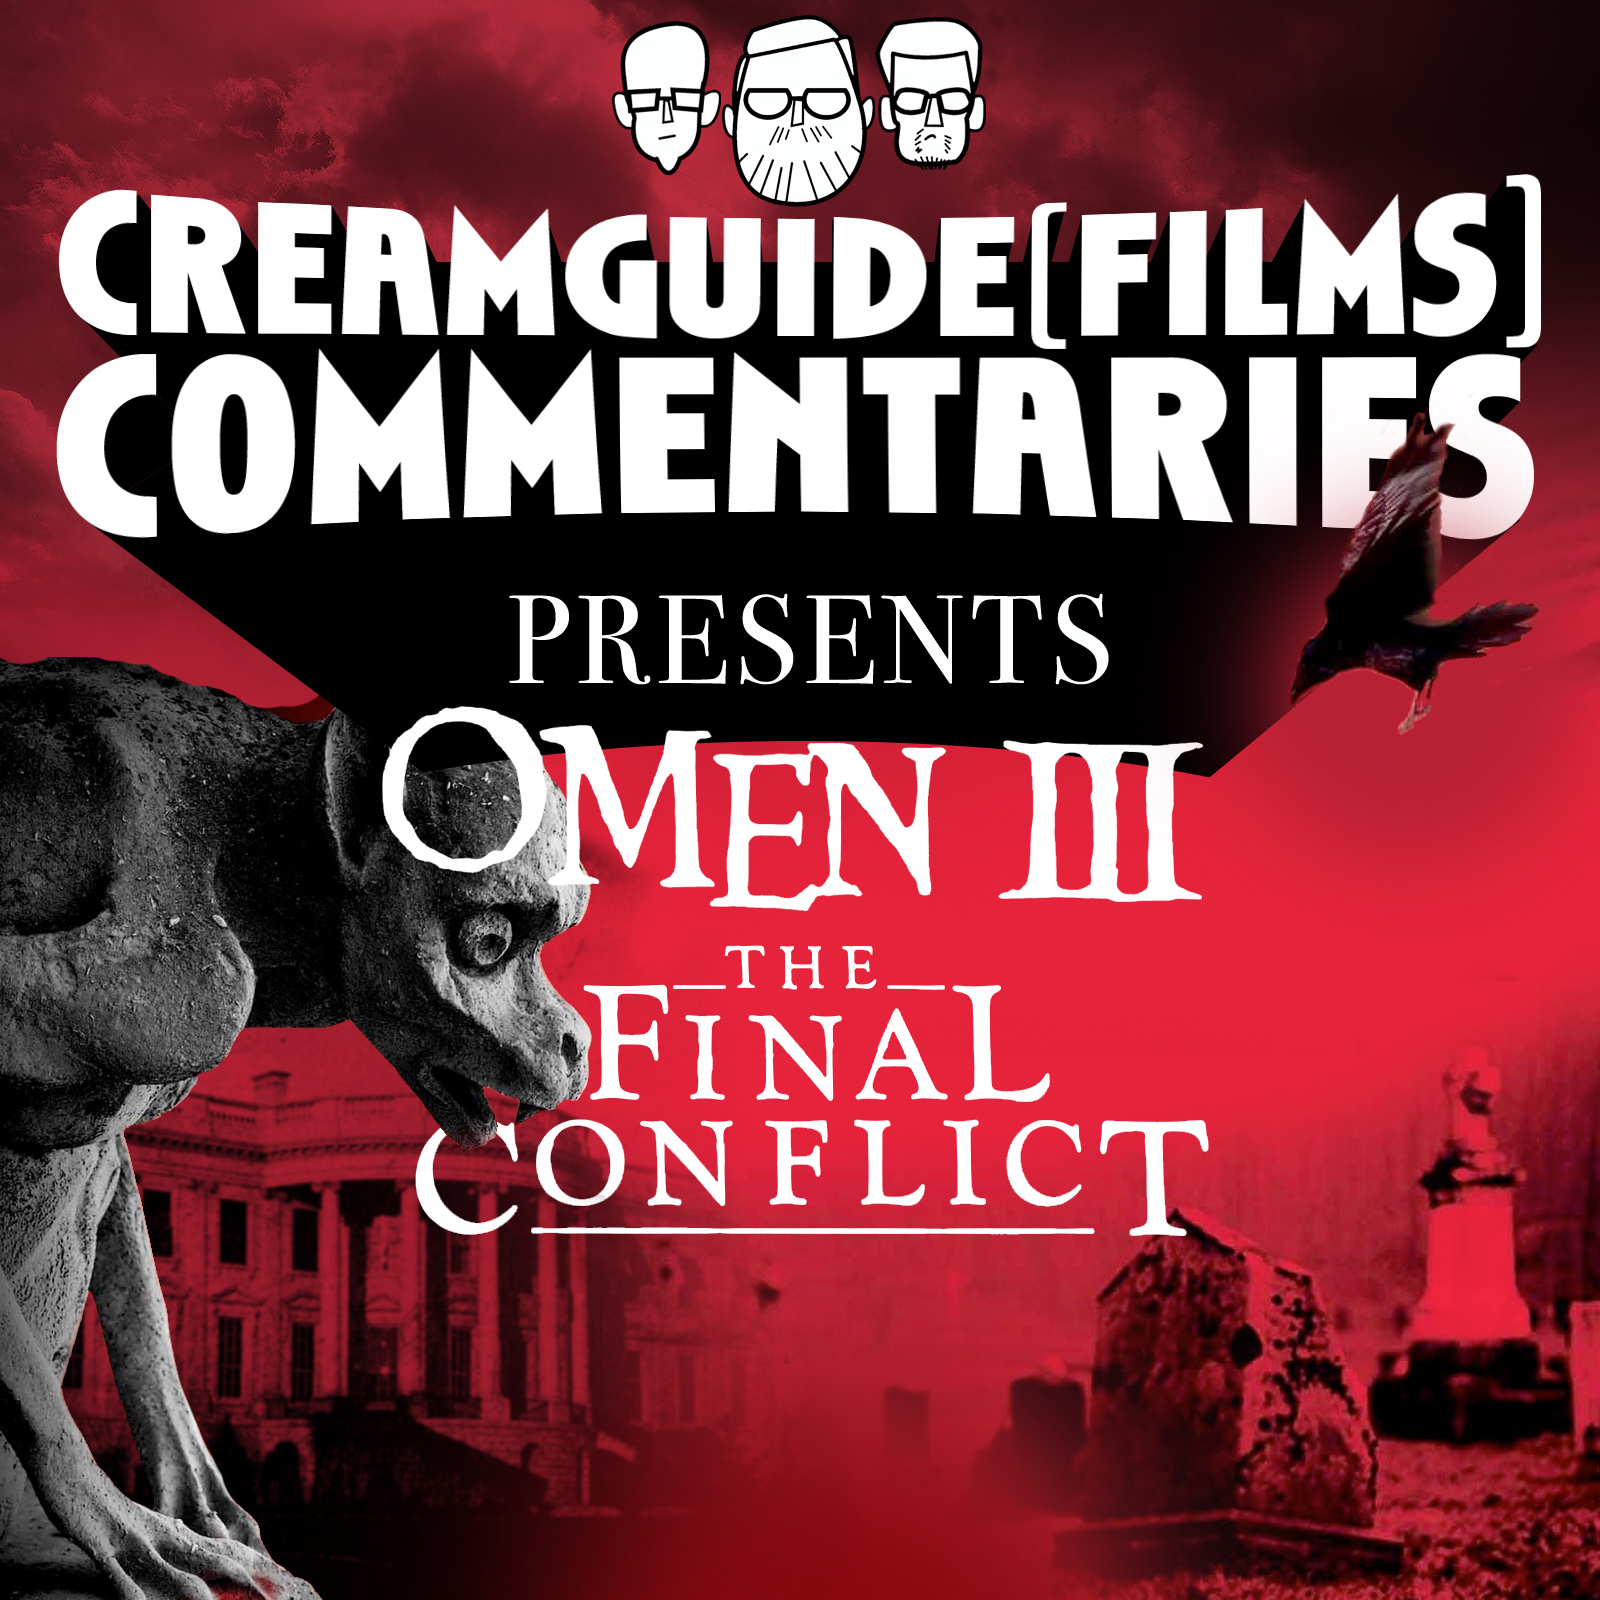 Creamguide(Films) Commentaries: Omen III